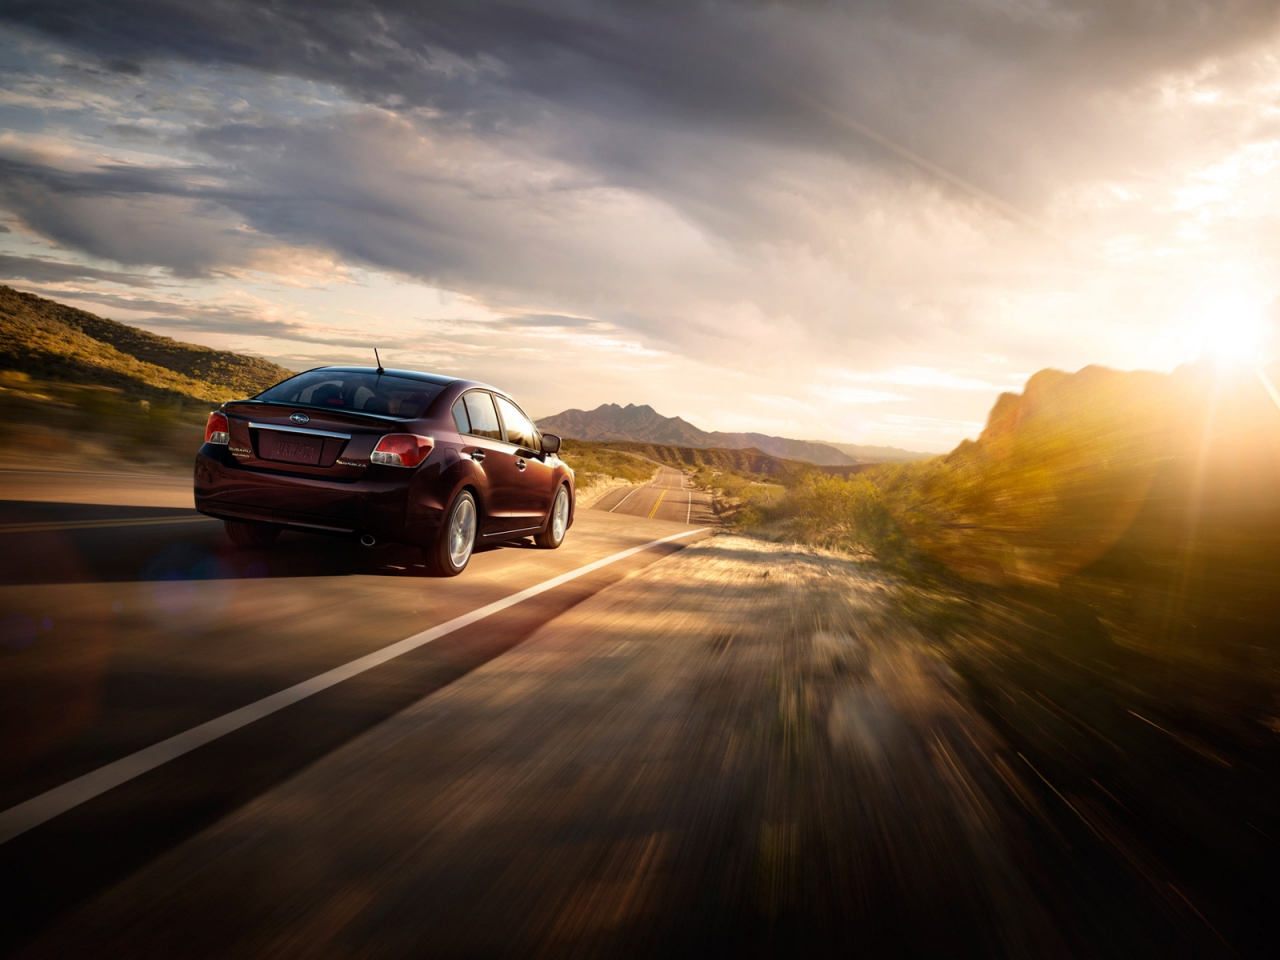 2012 Subaru Impreza Limited for 1280 x 960 resolution